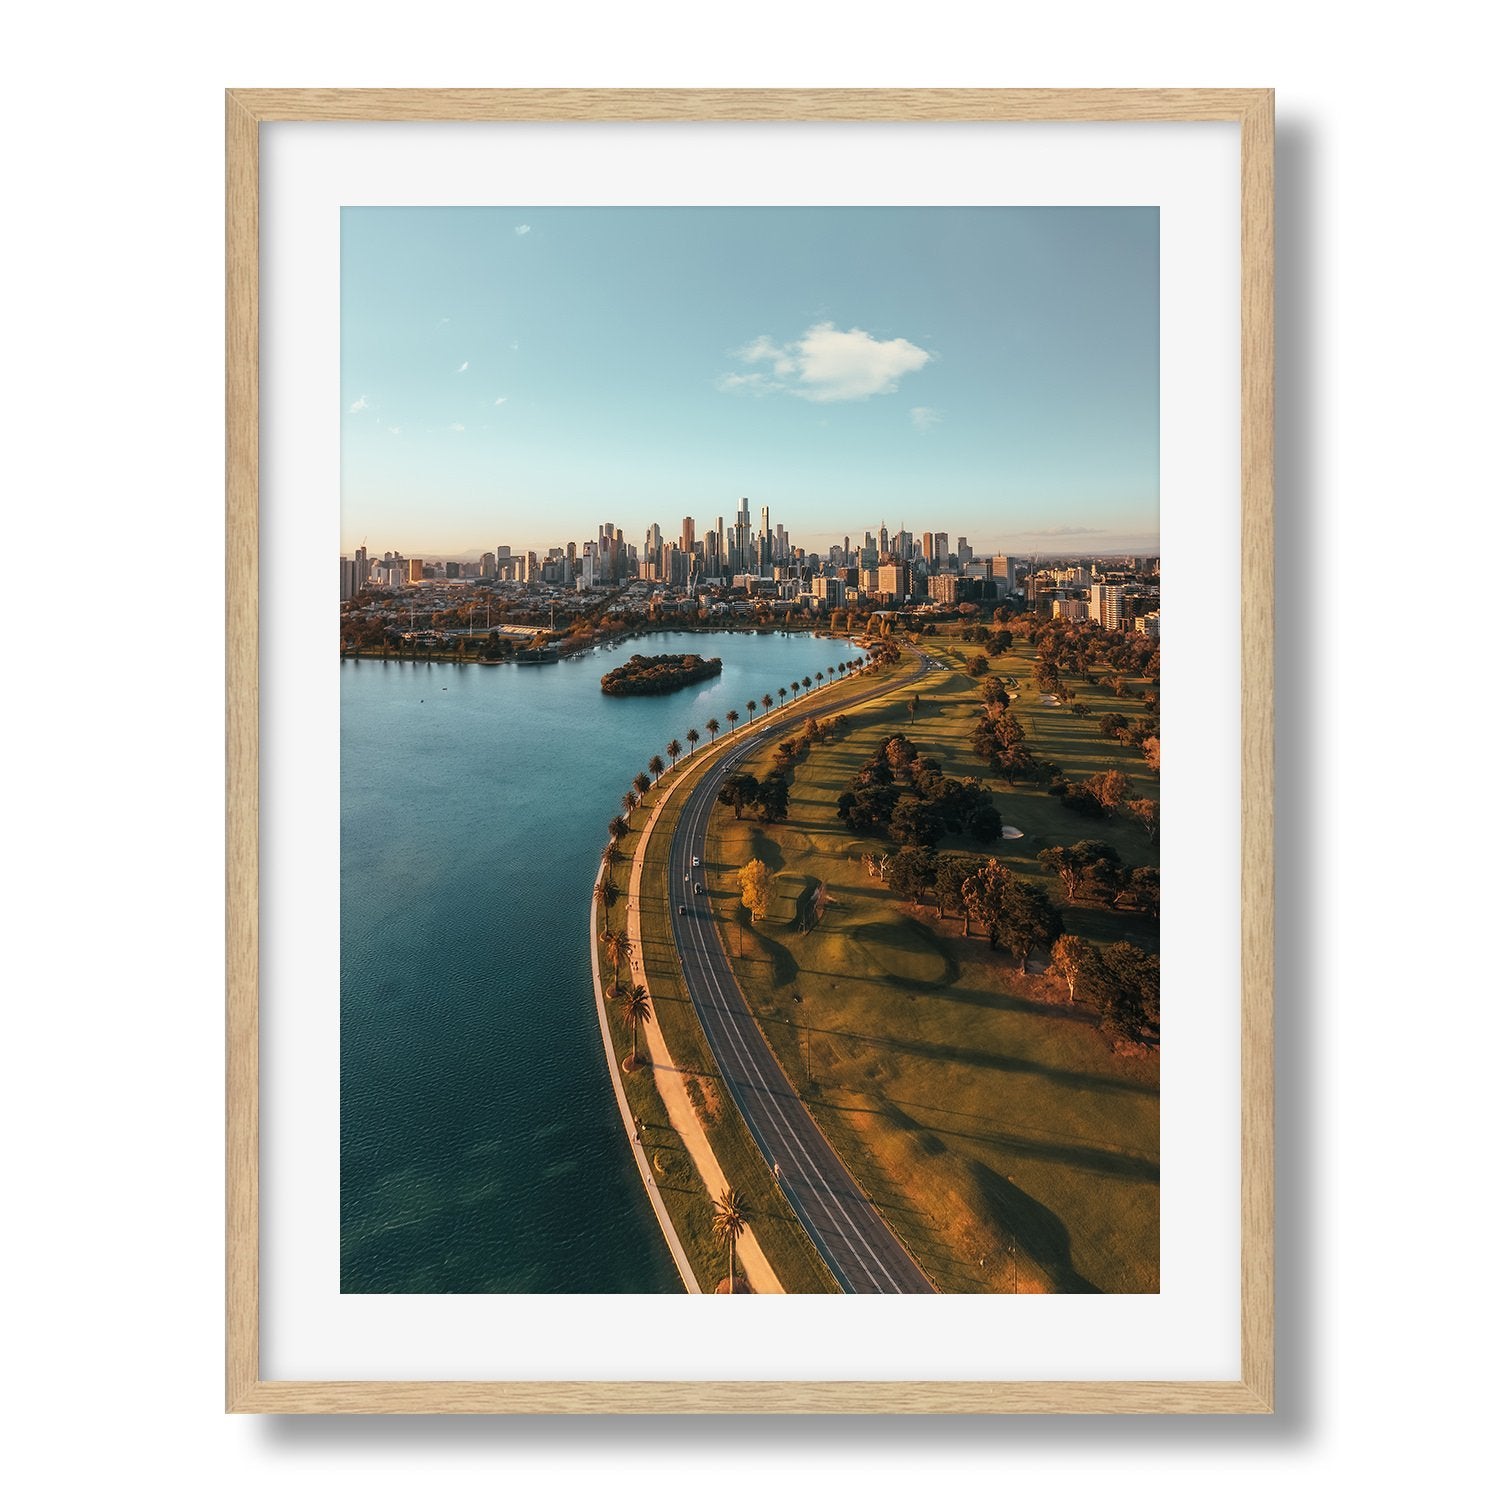 Albert Park F1 Circuit Melbourne Sunset | Premium Framed Print - Peter Yan Studio